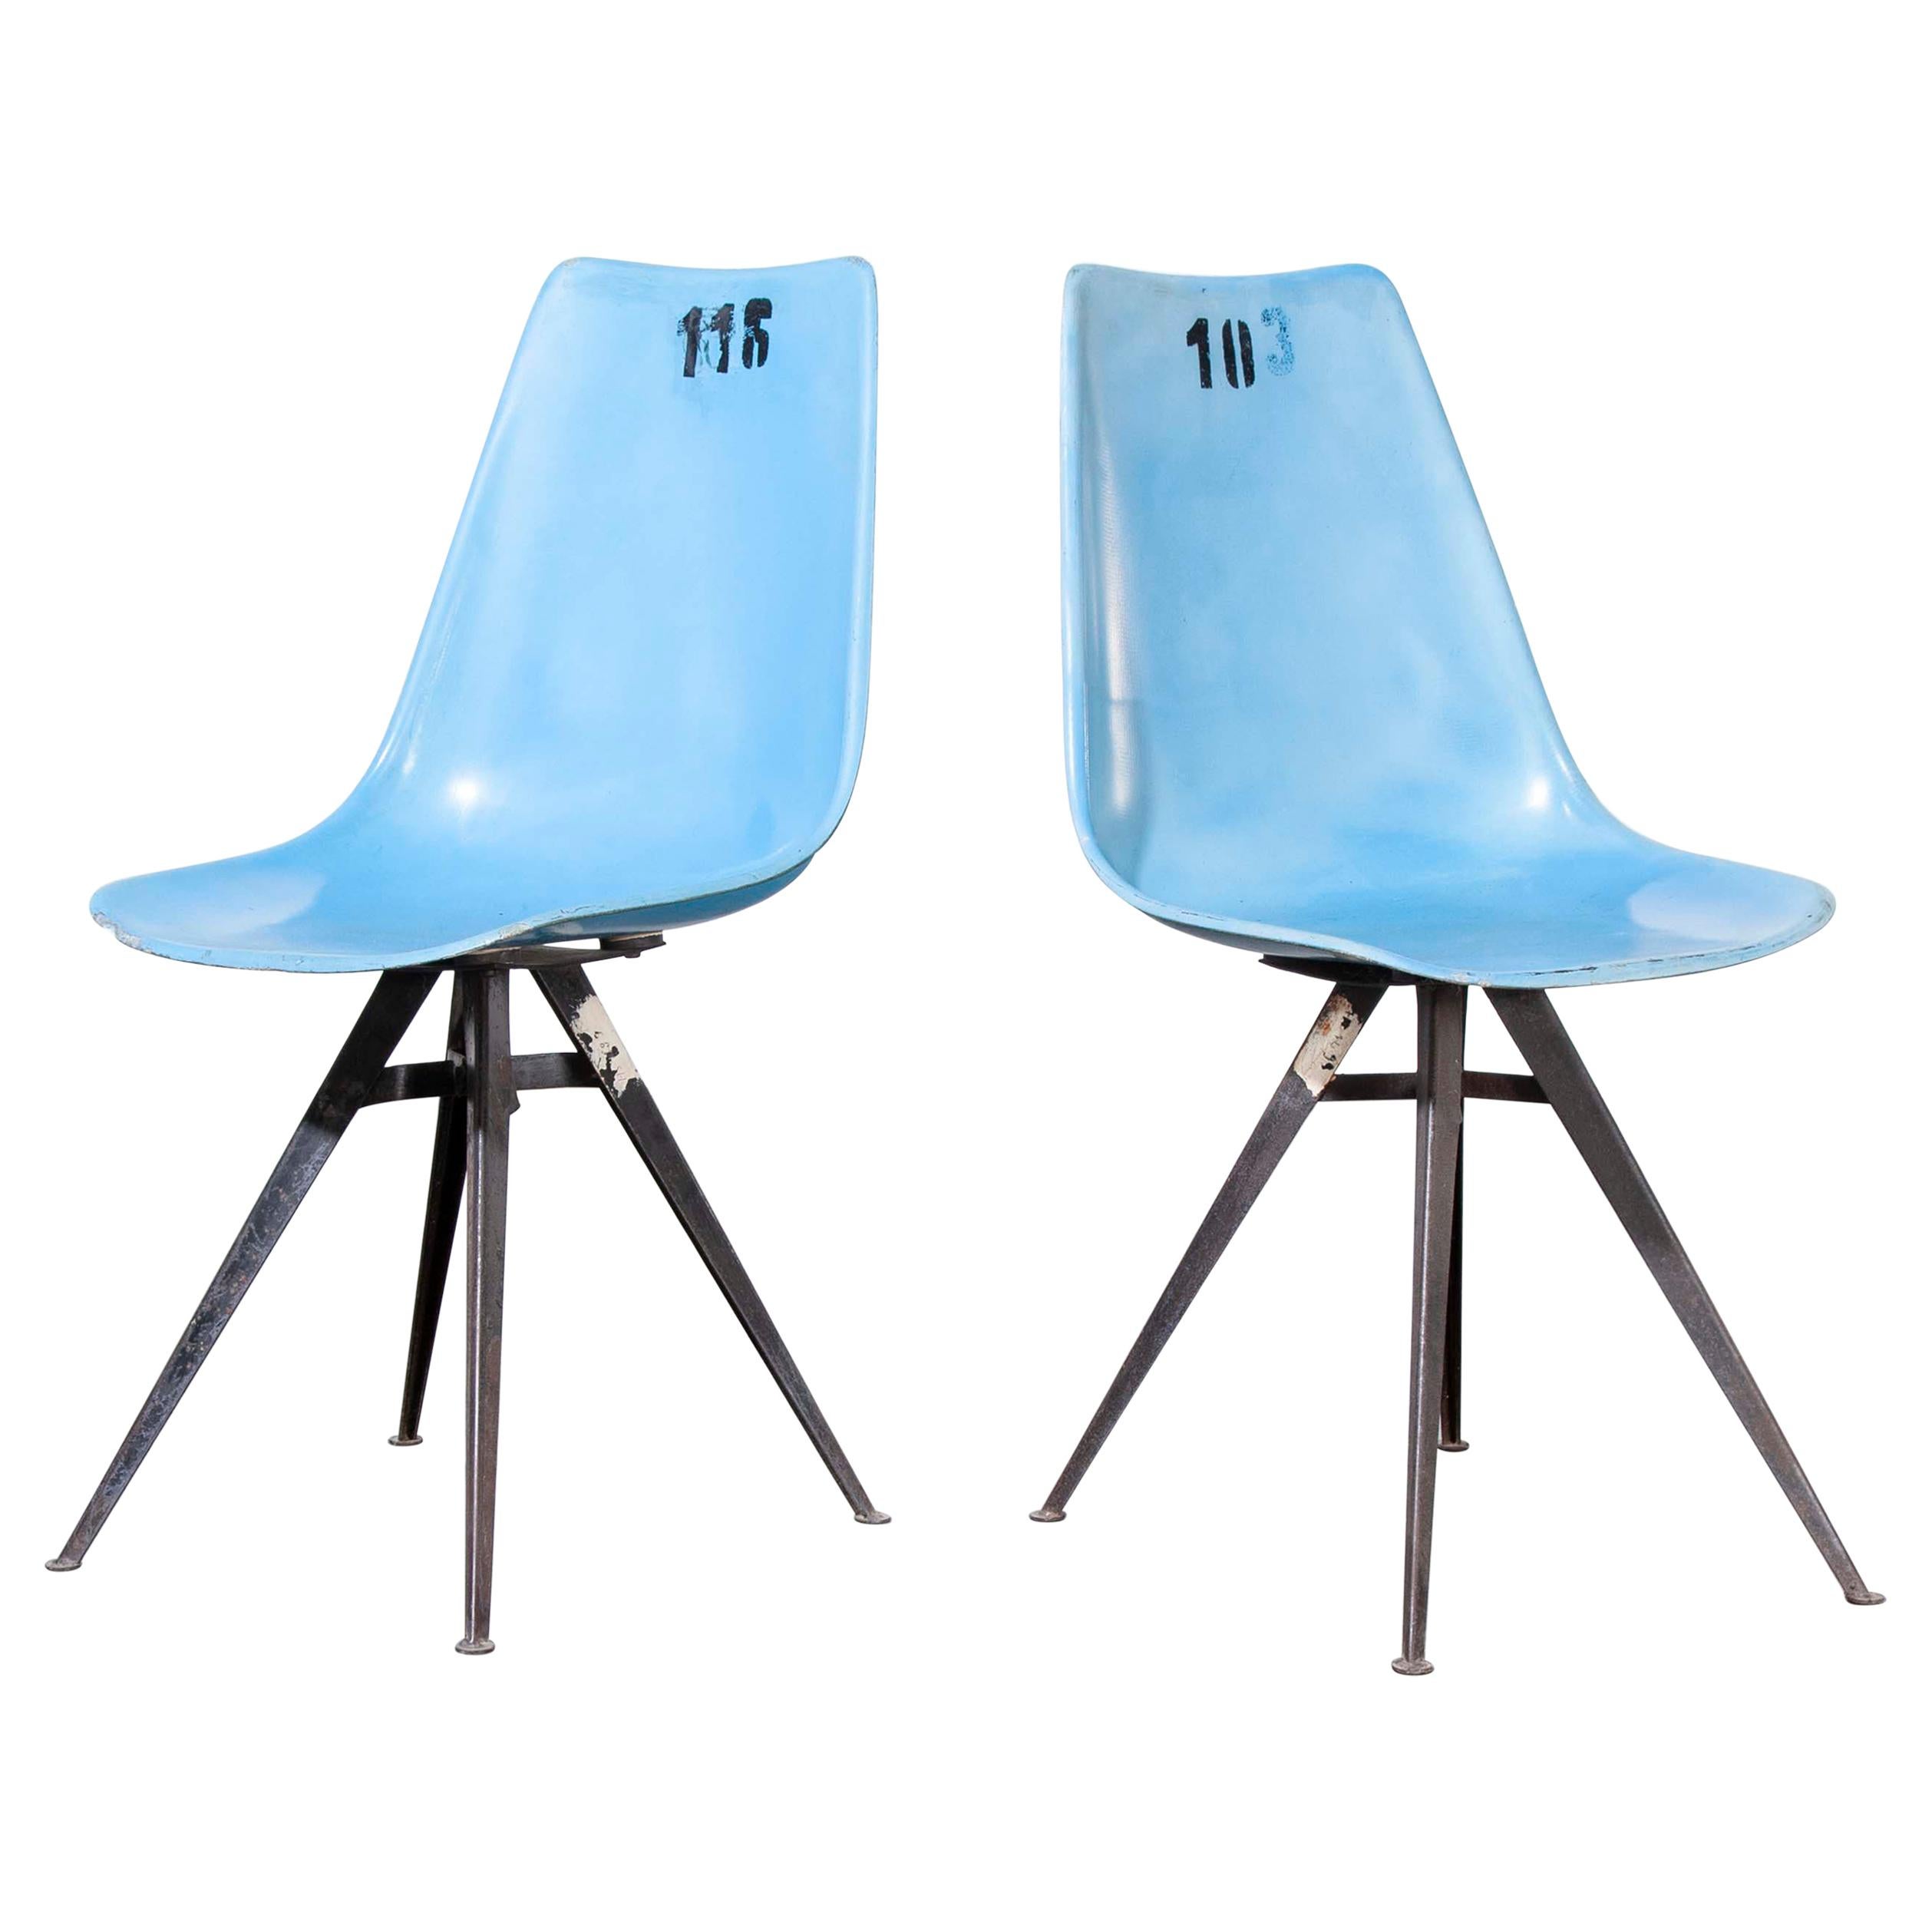 1960s Pair of Original Blue Fiberglass Side / Dining Chairs